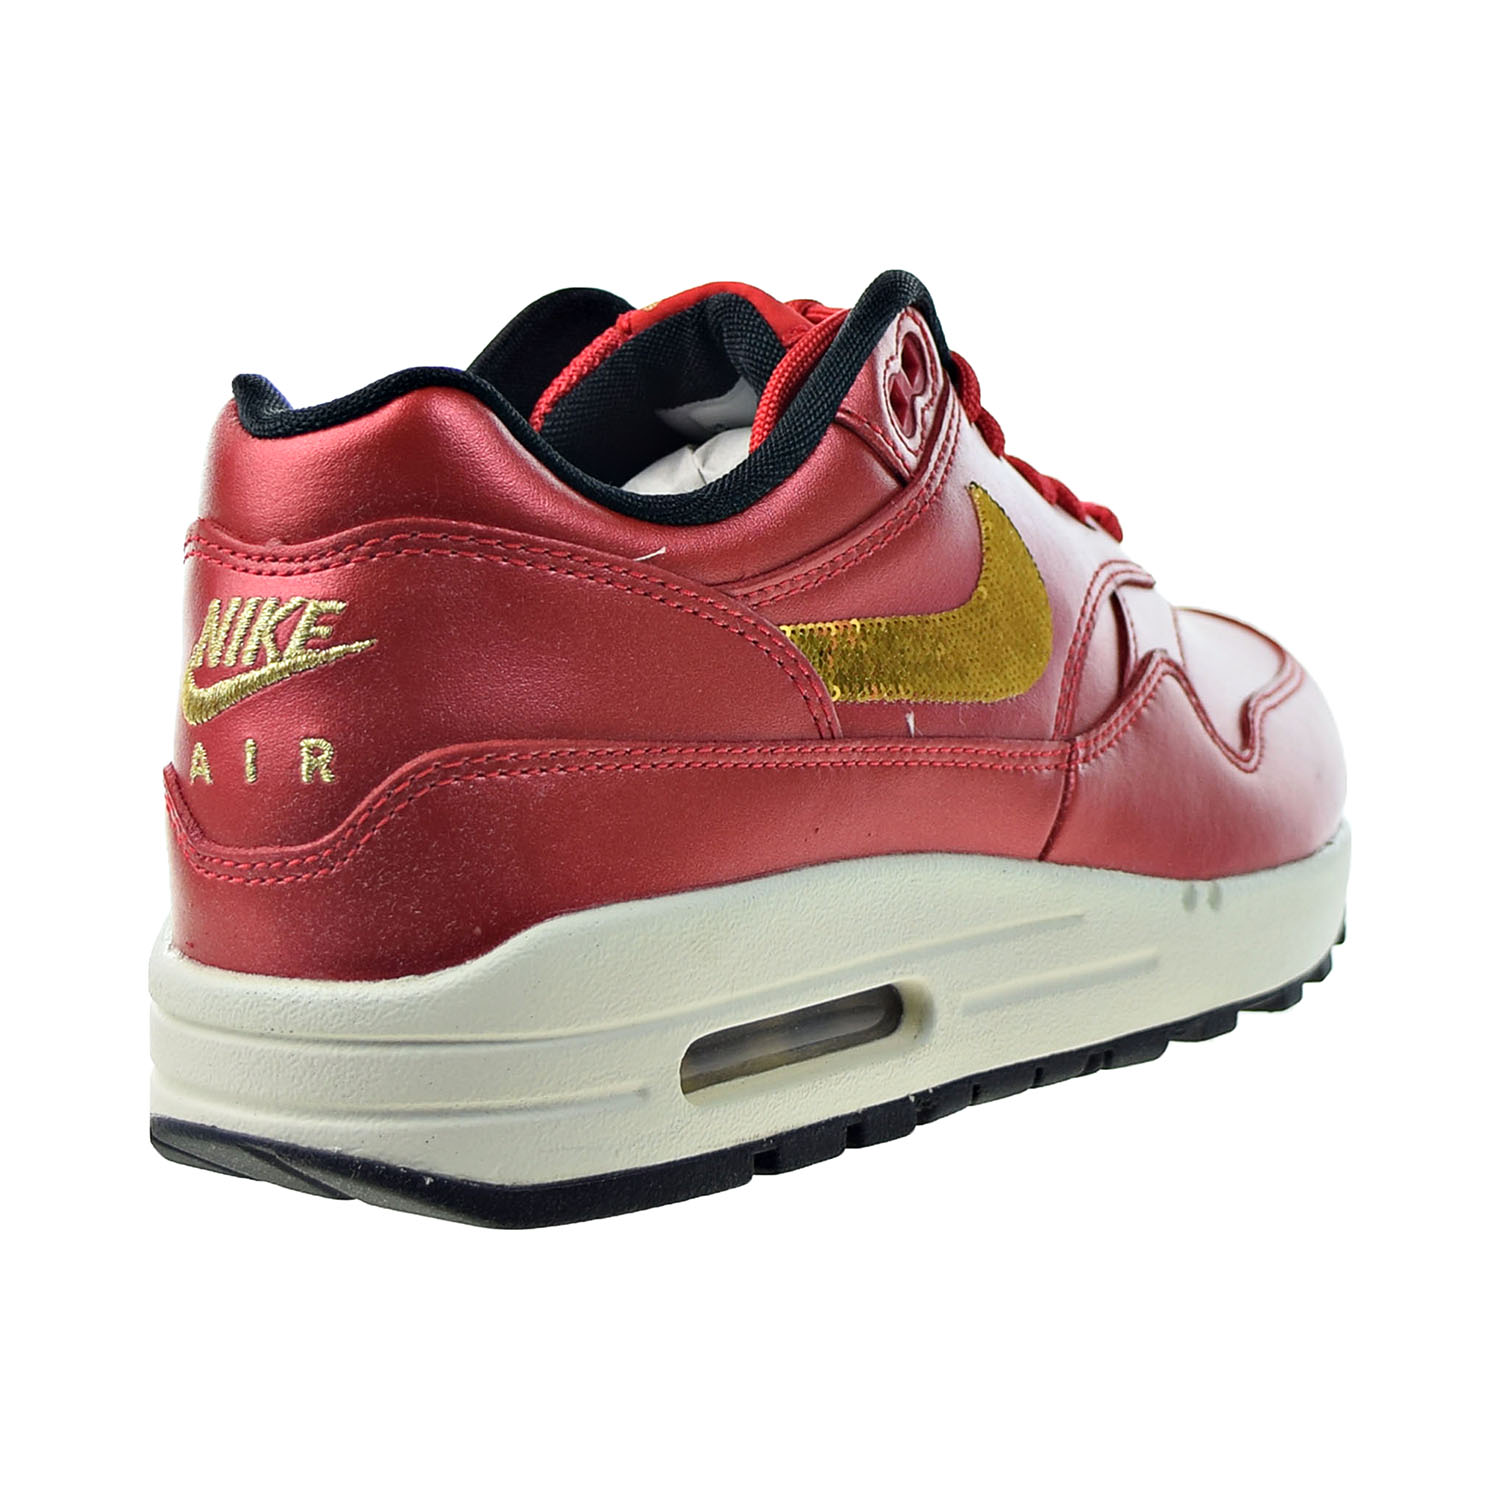 Nike Air Max 1 Women's Shoes University Red-Metallic Gold ct1149-600 - image 3 of 6